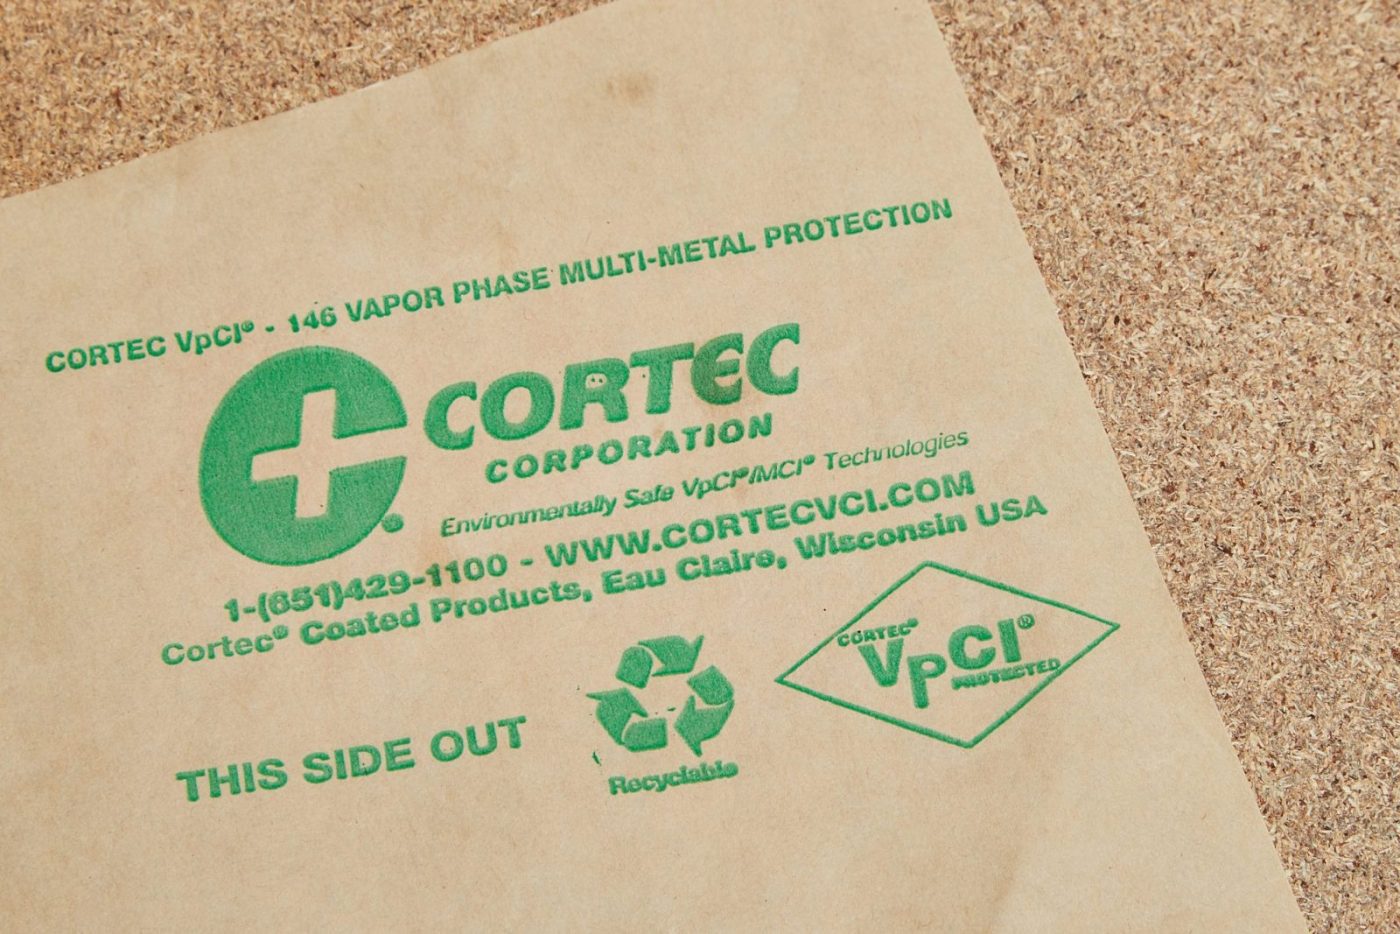 Cortec CorShield® VpCI® 146 Anti Corrosion Wrapping Paper 36" (92cm) x 600' (183mtr) 64gsm Valdamarkdirect.com